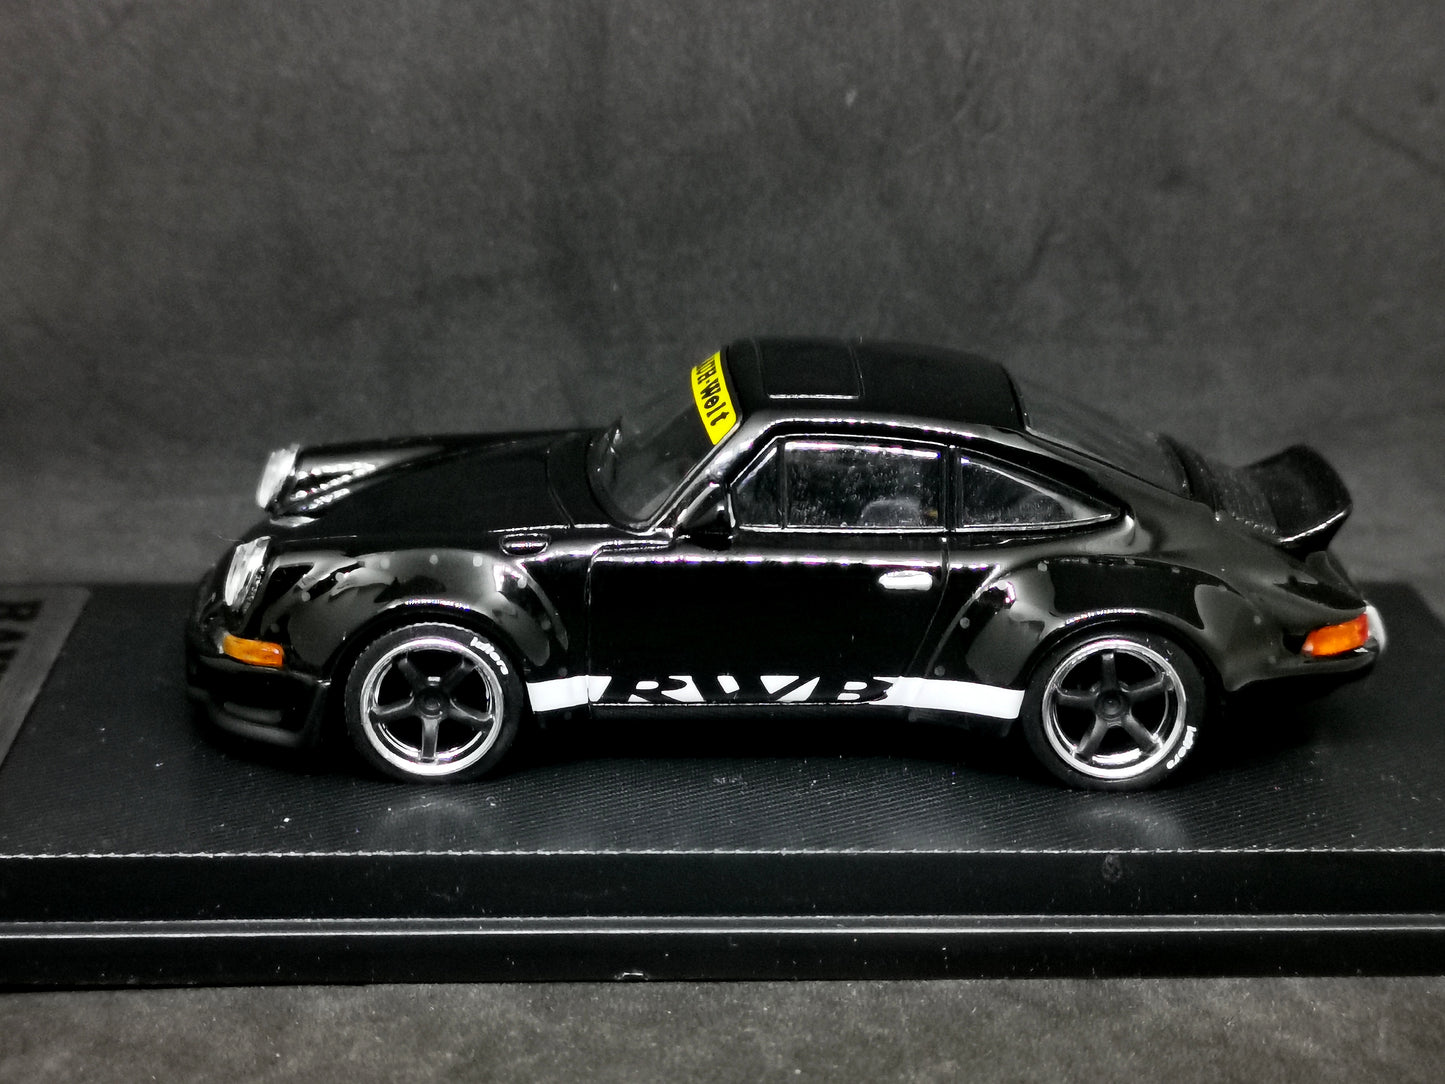 Model Collect RWB Porsche 930 Ducktail Wing Metallic black 1:64 SCALE